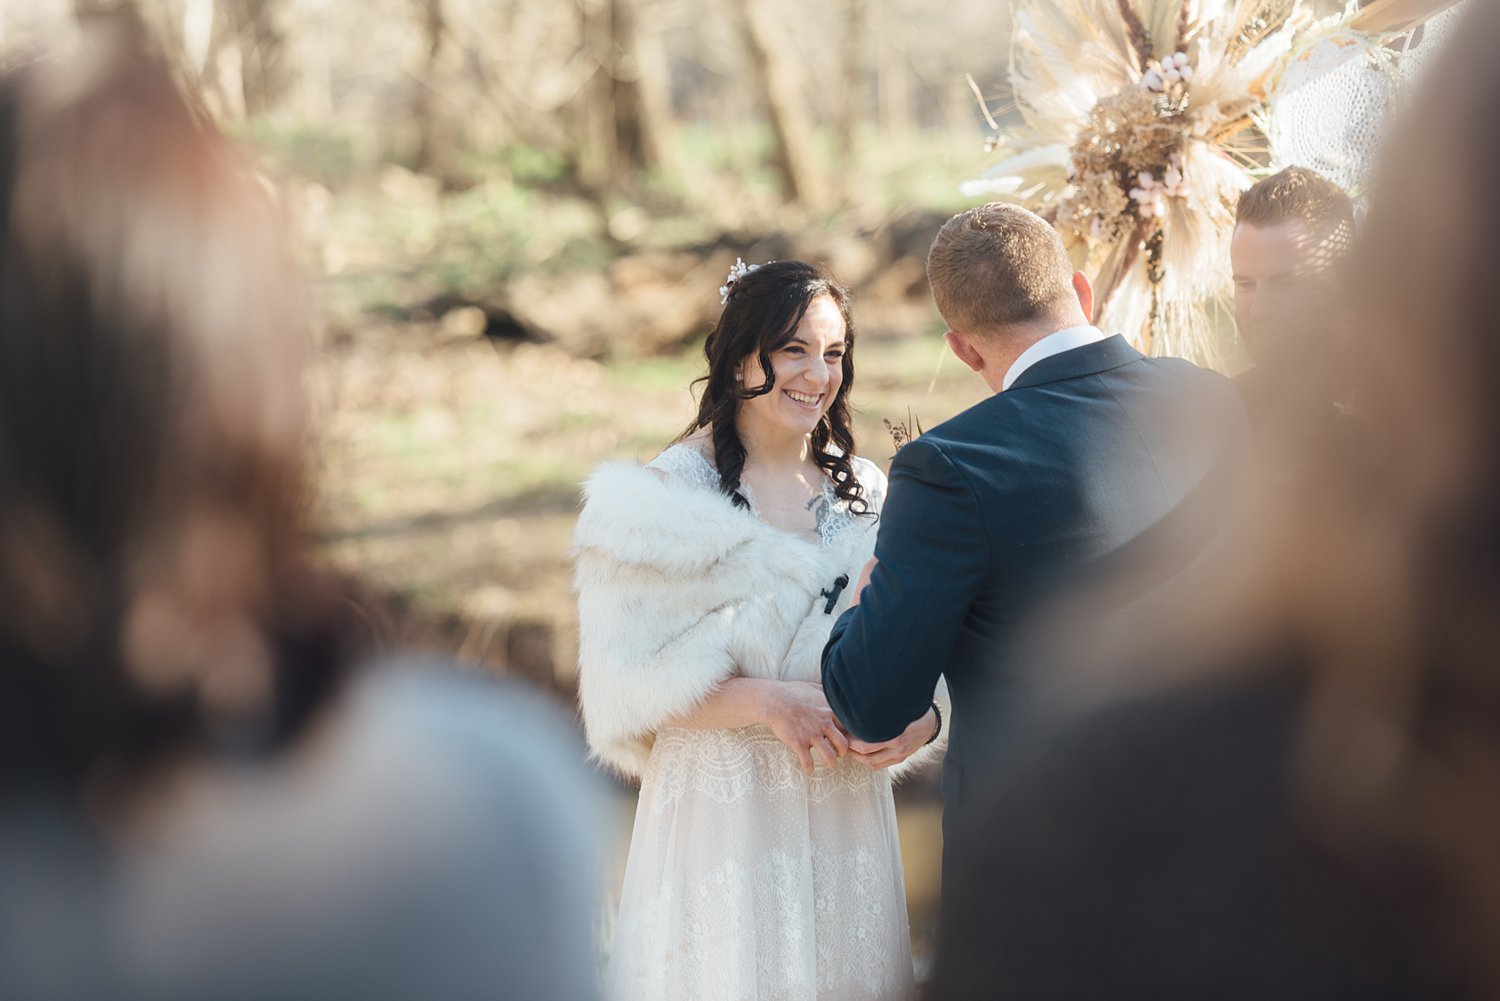 Dara + John - Pennyfield Lock Wedding - Potomac Maryland family photographer - Alison Dunn Photography photo